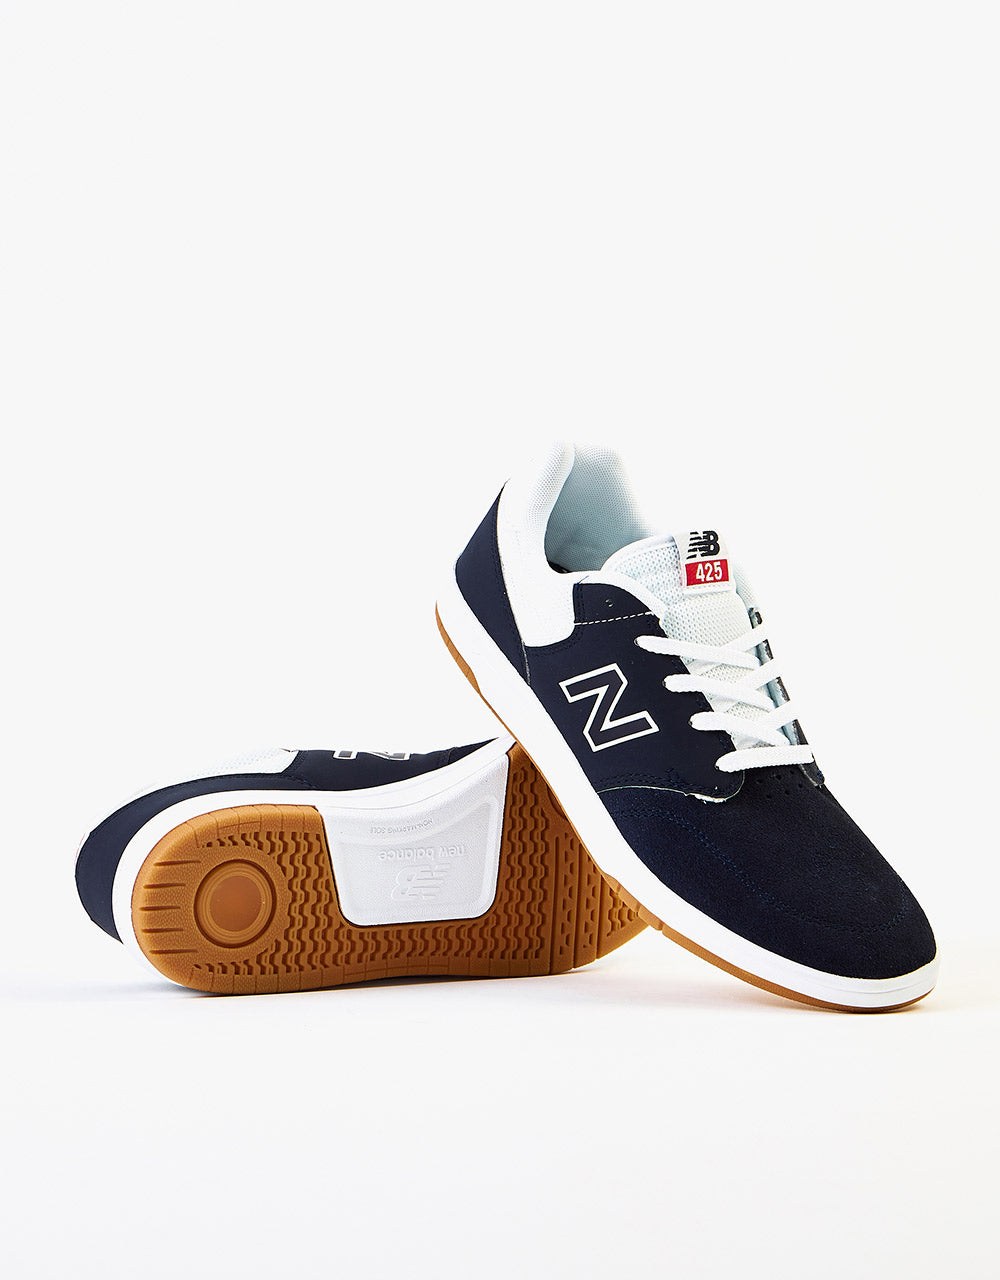 New Balance Numeric 425 Skate Shoes - Navy/White